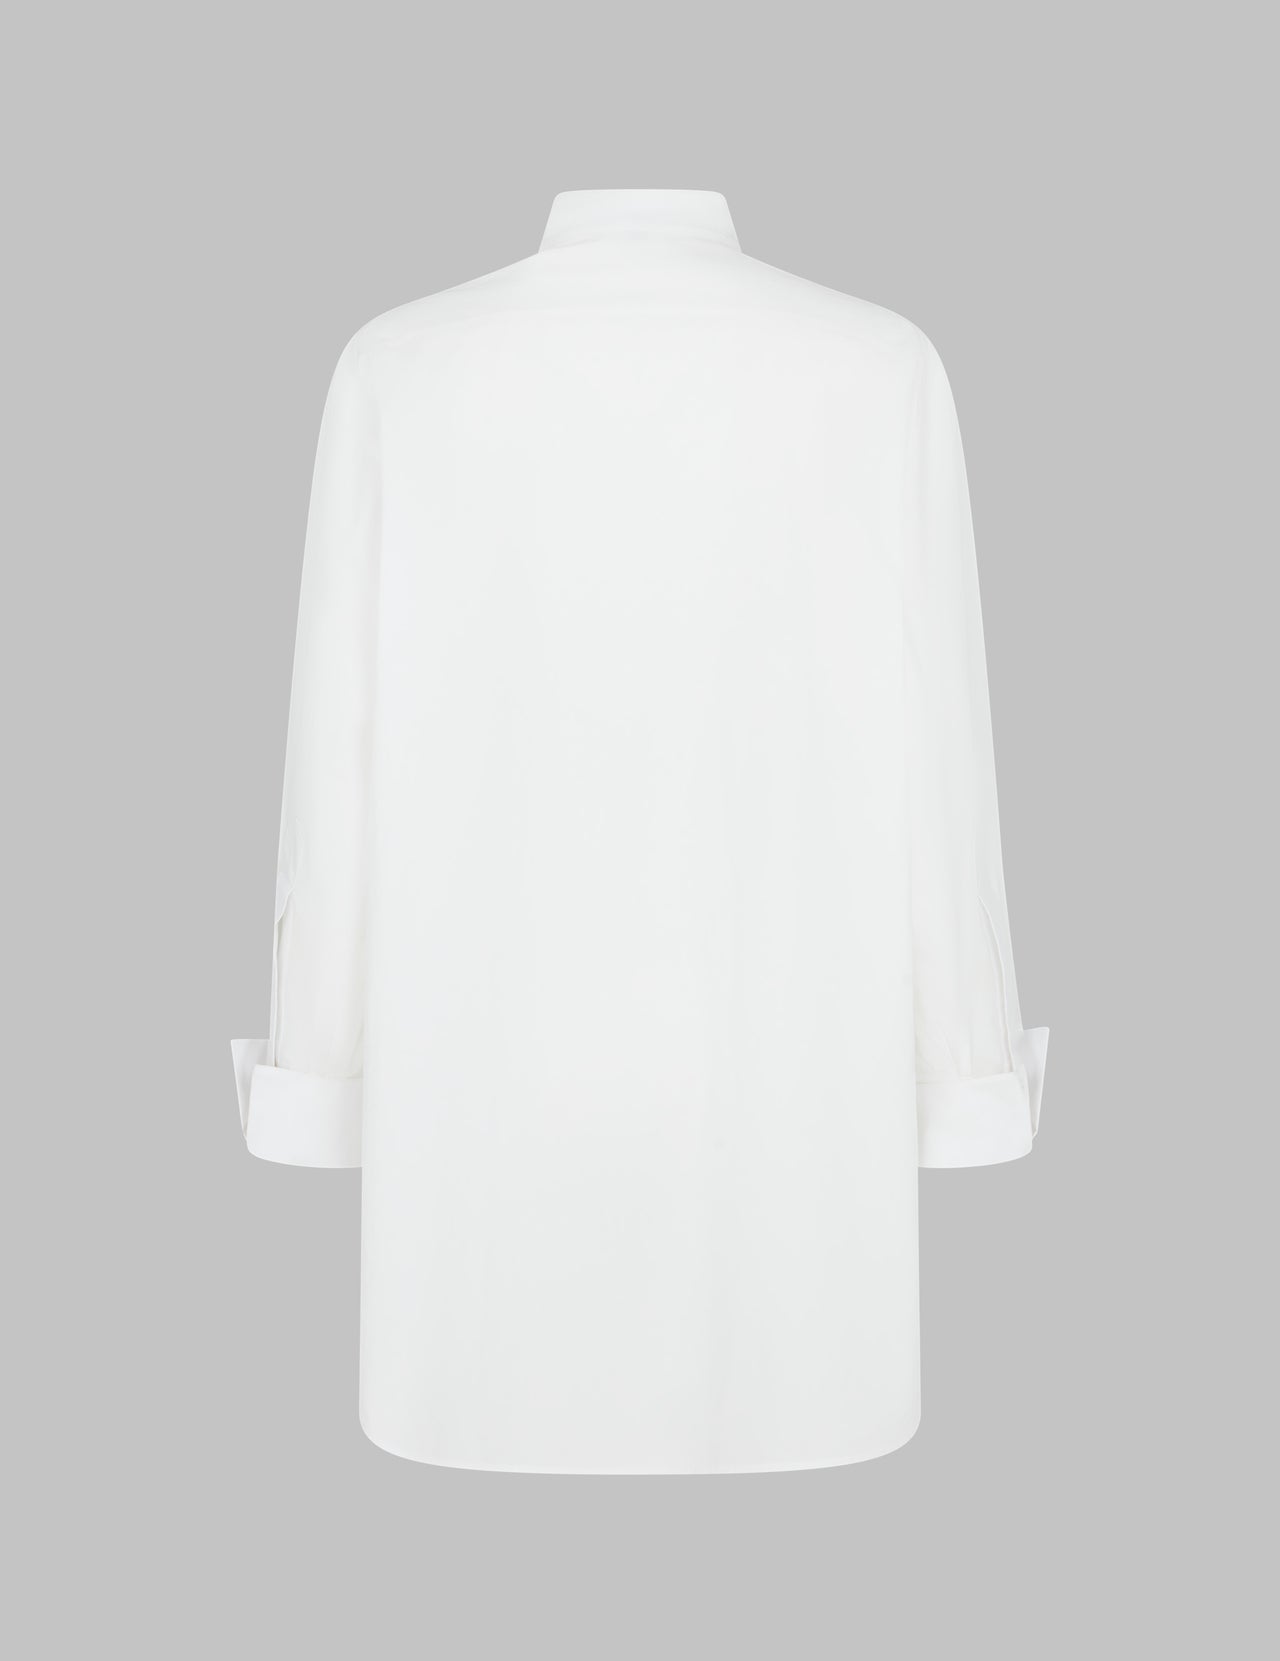  White Cotton Shirt 